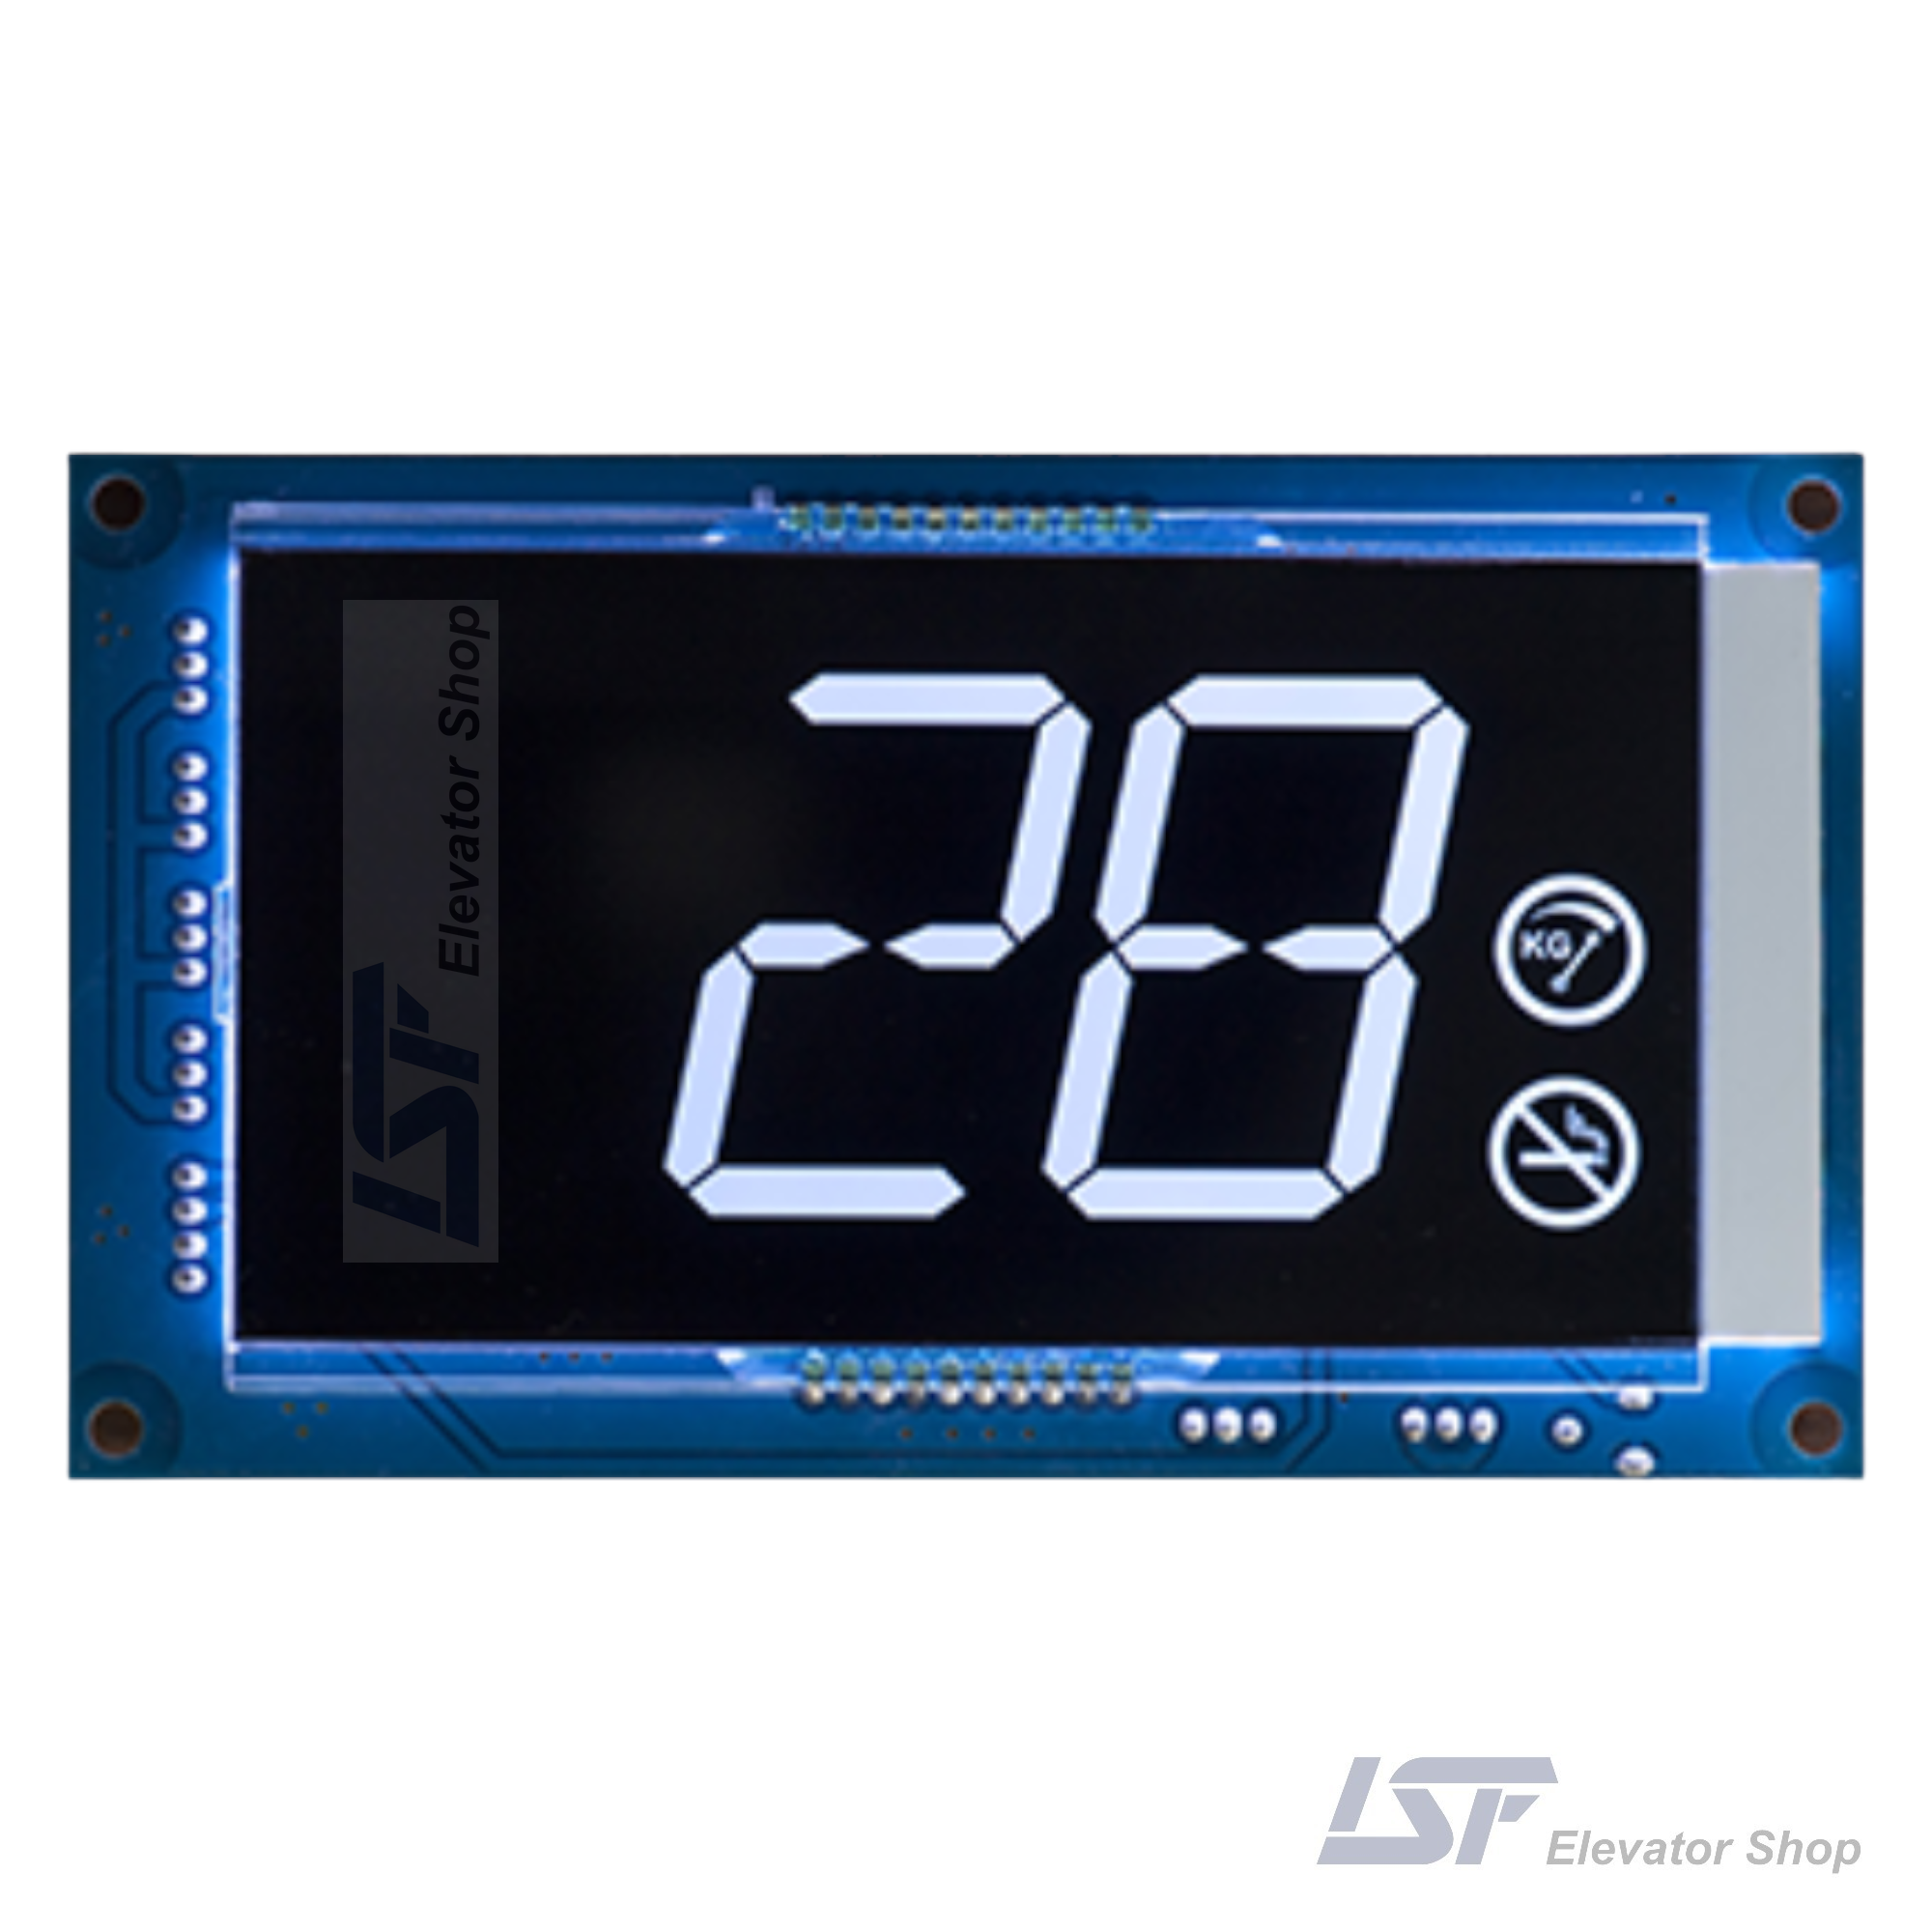 BC-LCD10555 Arkel Landing Call & Indicator Unit (105x55mm RGB LCD Indicator)